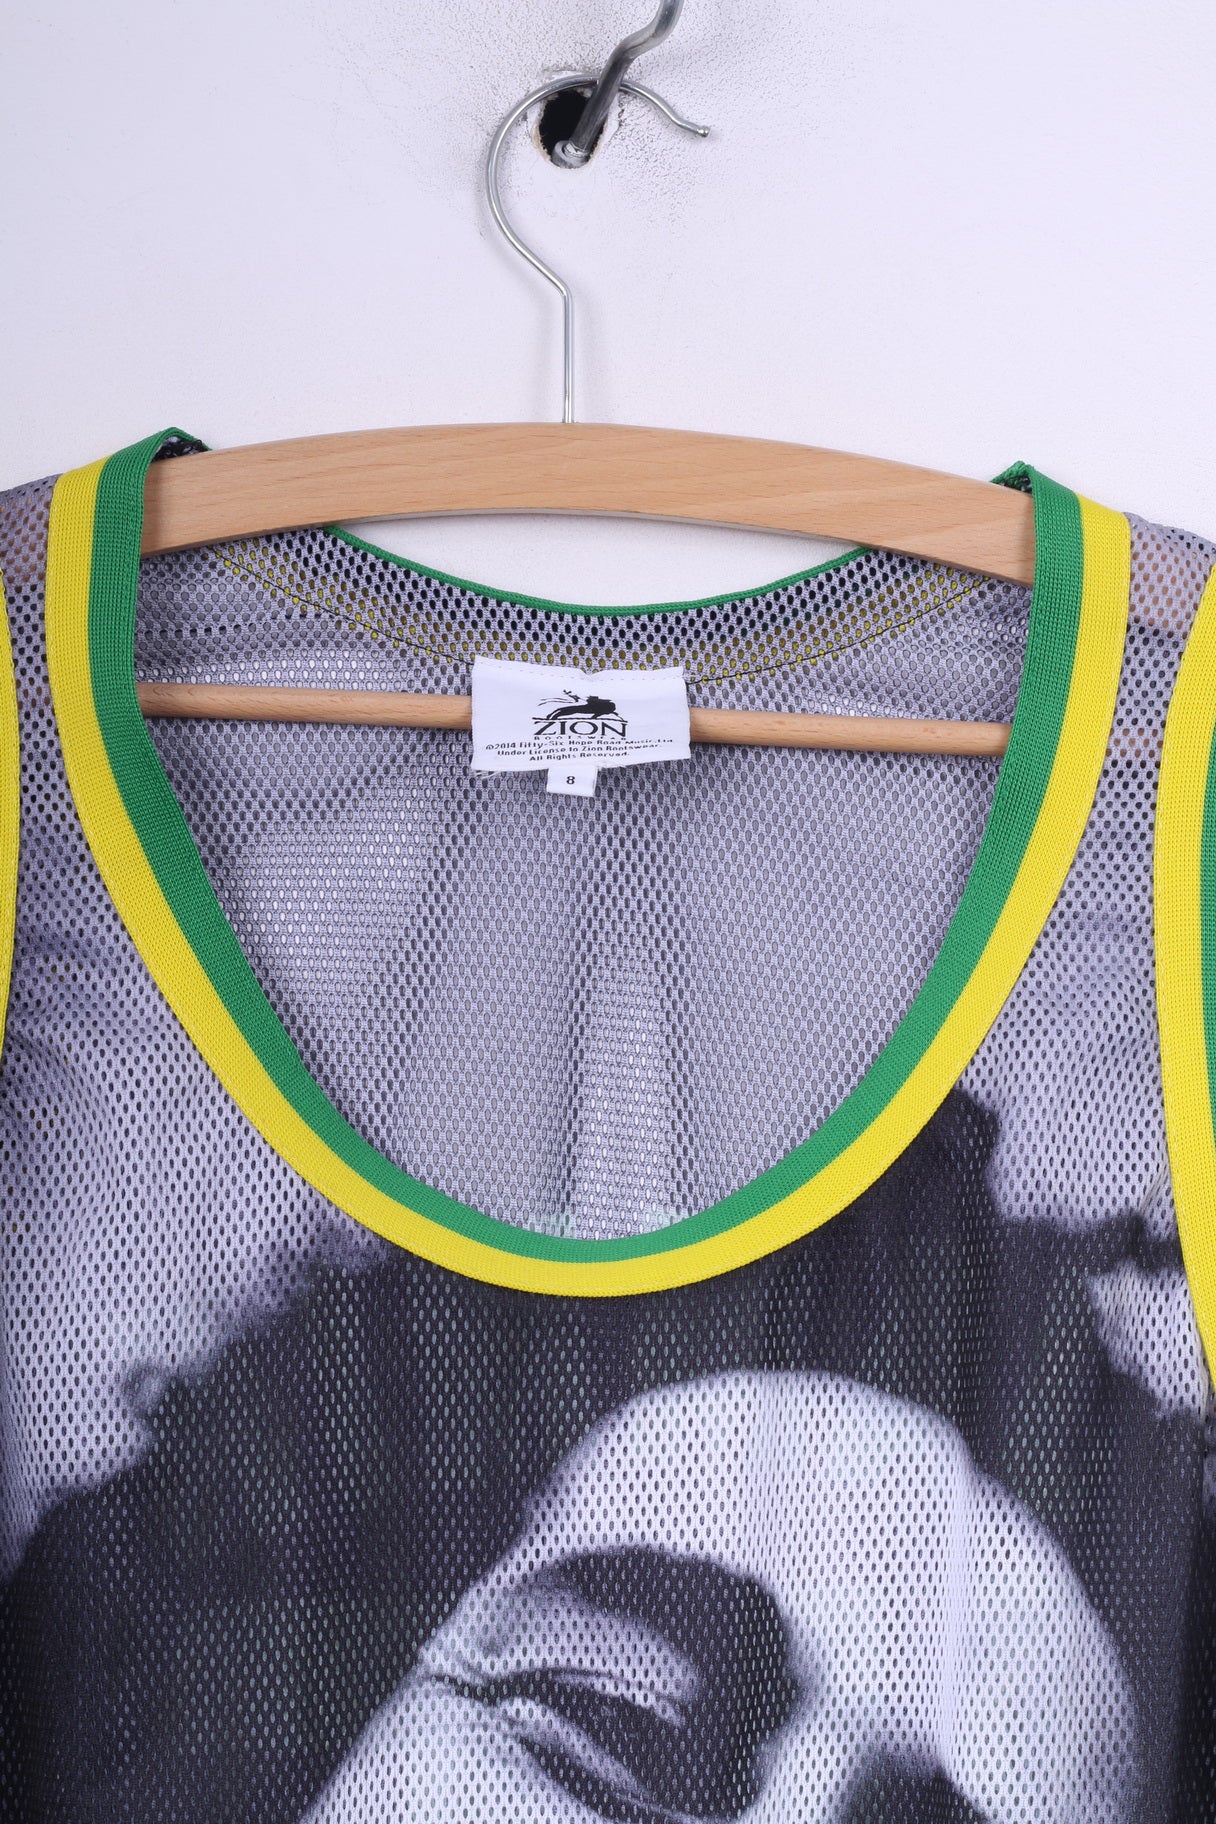 Atmosphere Zion Rootswear Bob Marley Womens 8 S Tank Top Graphic Vest Mesh Black Jammin #45